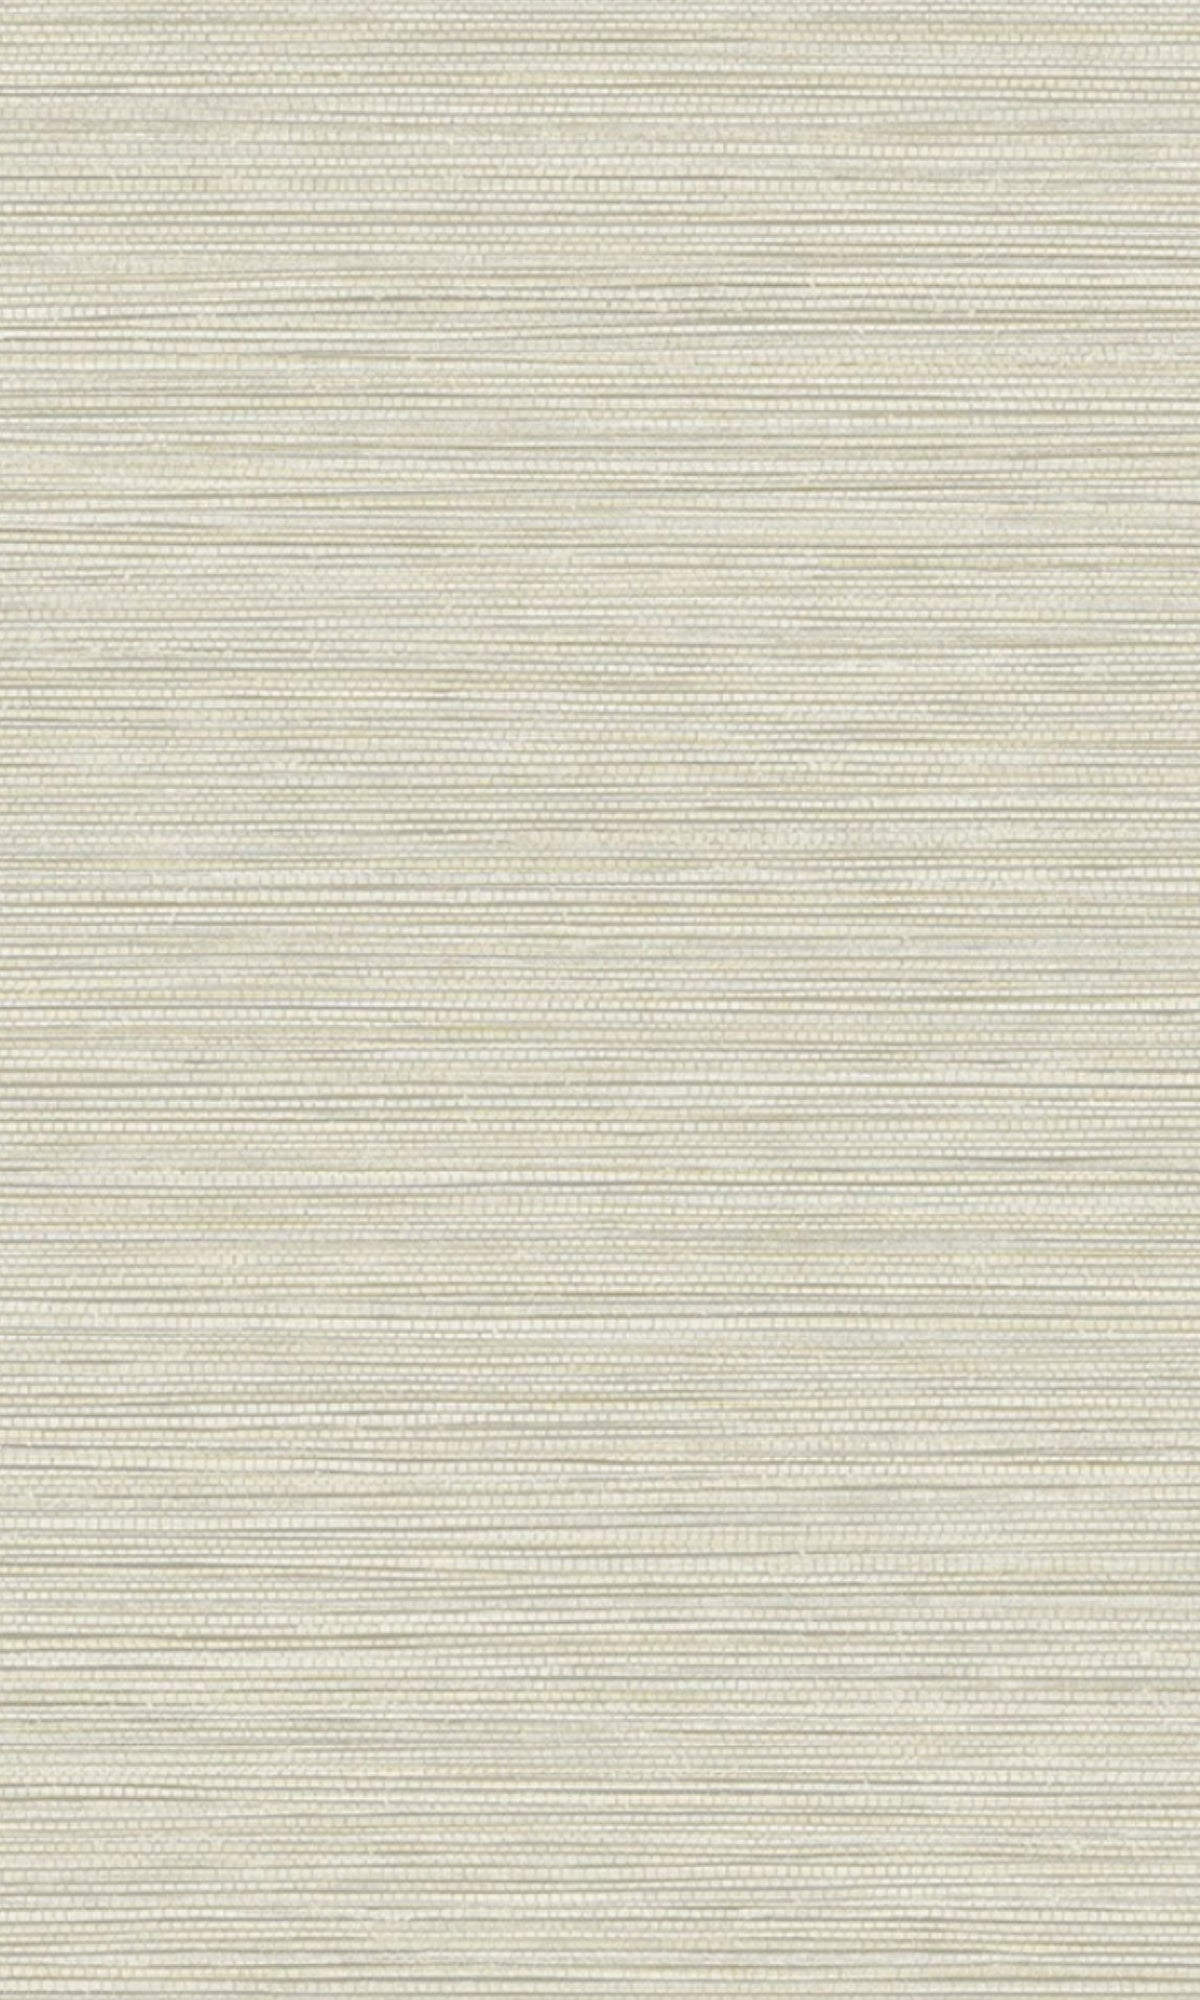 Feather Grass Horizontal Line Textured Vinyl Commercial Wallpaper C7552